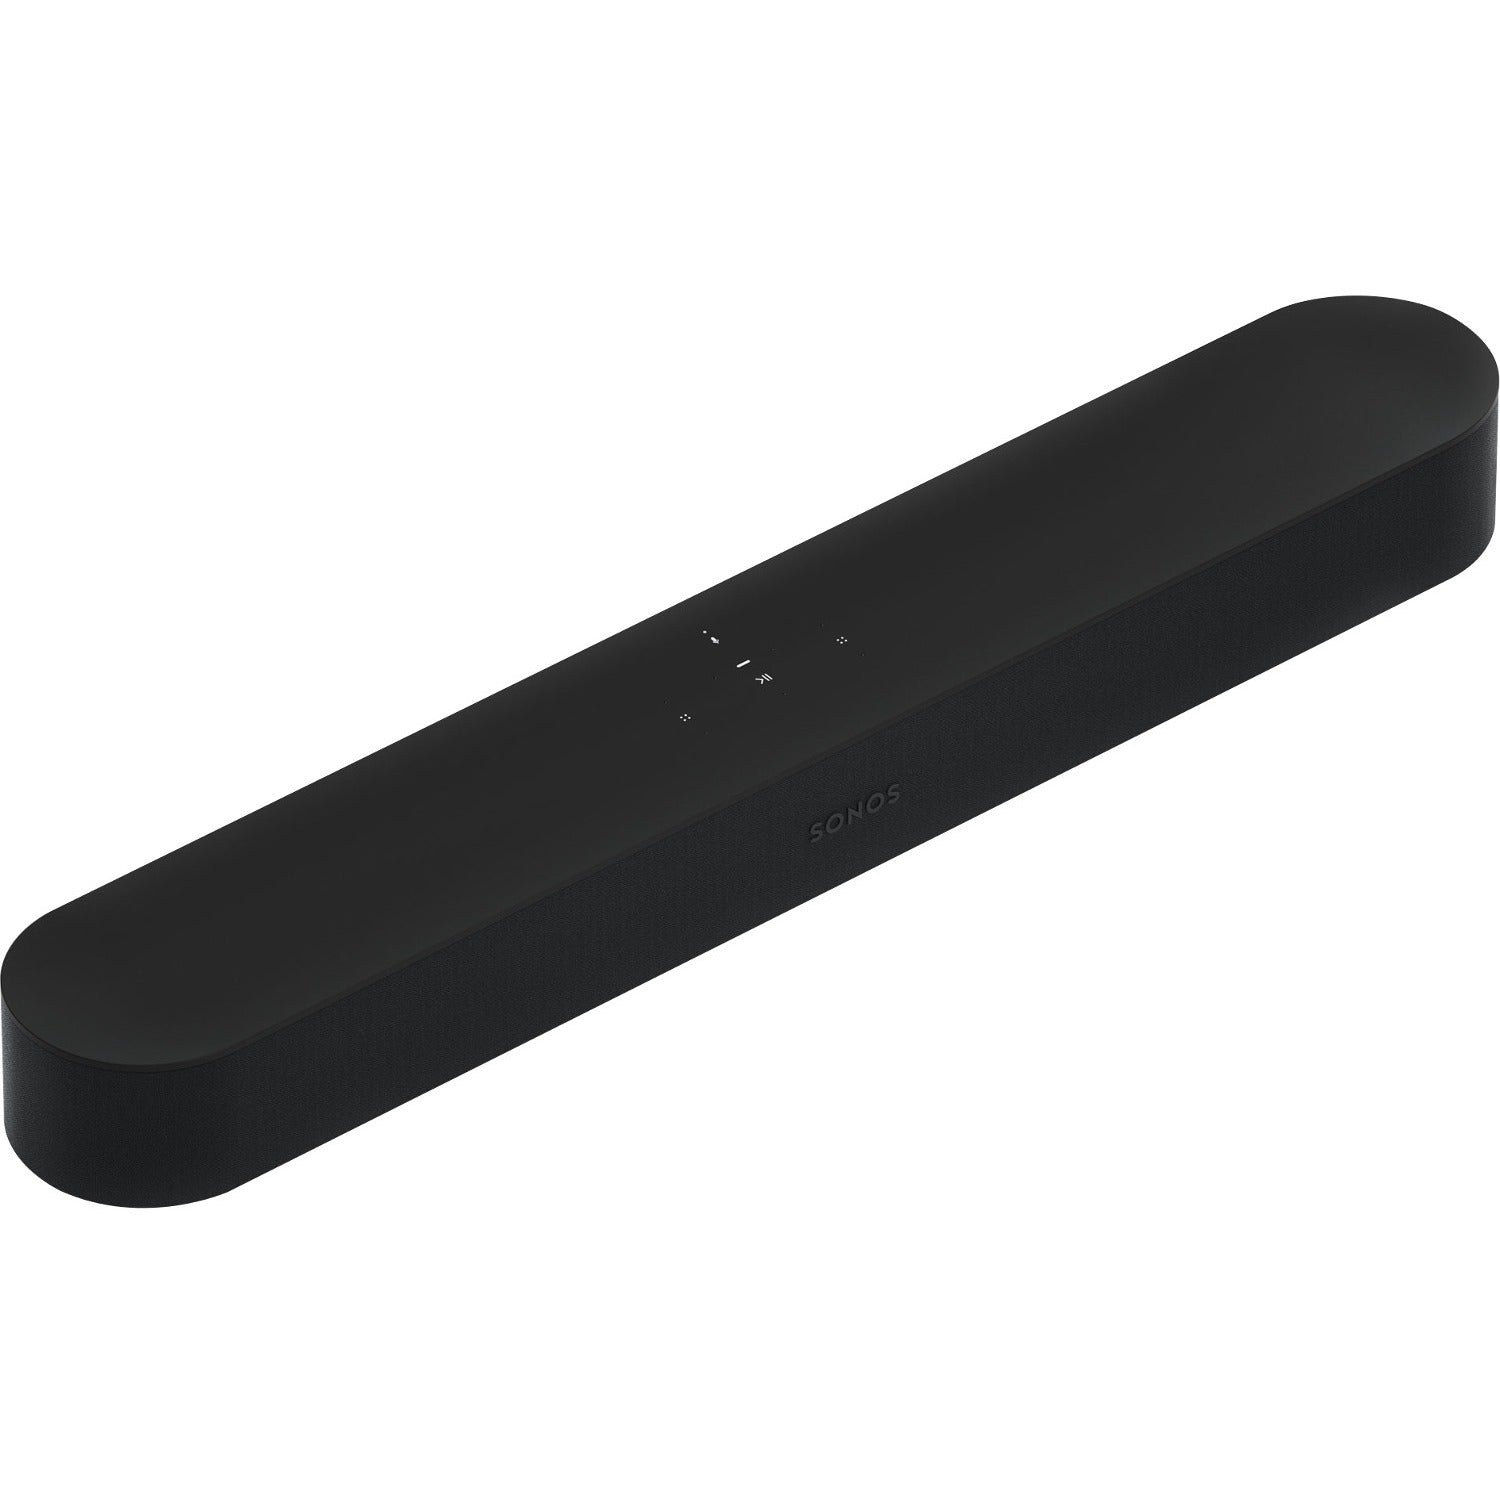 Sonos Beam (Black)- Front View